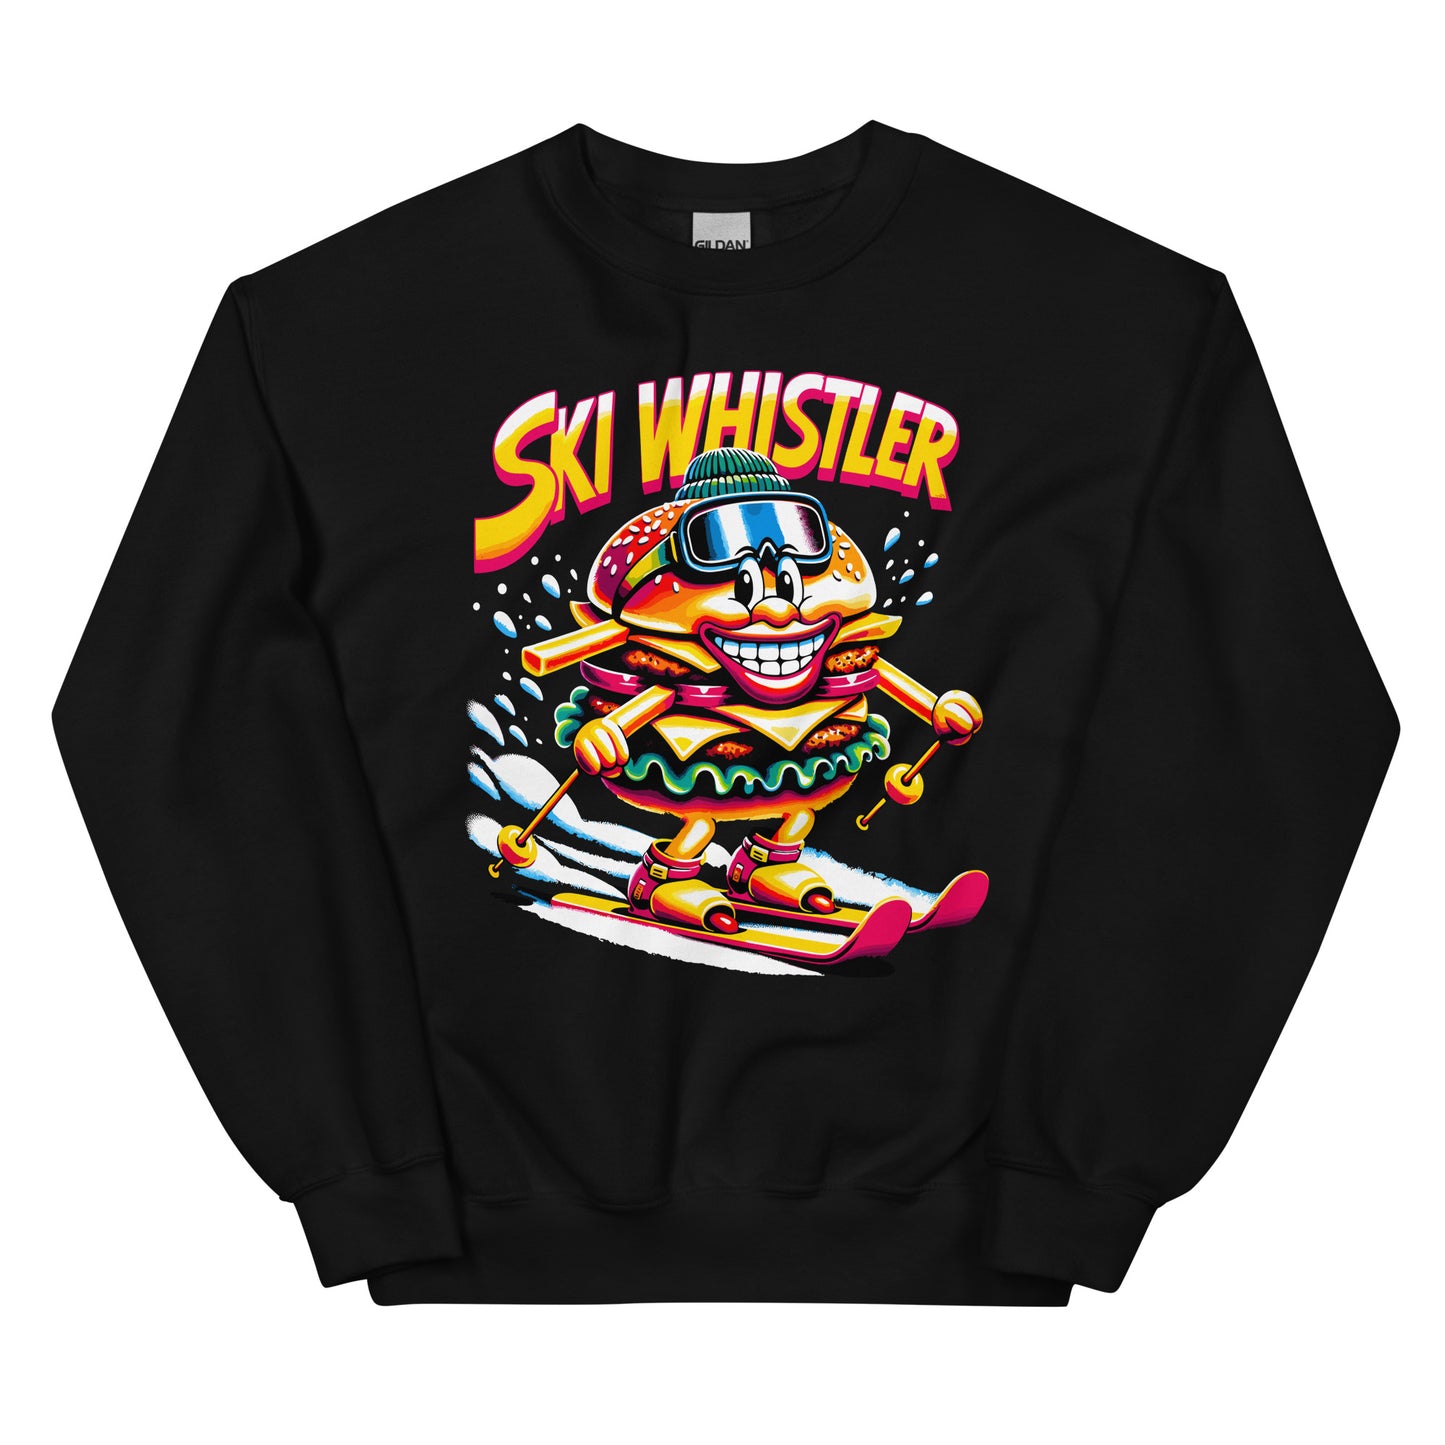 Ski Whistler Hamburger Man Crewneck Sweatshirt printed by Whistler Shirts